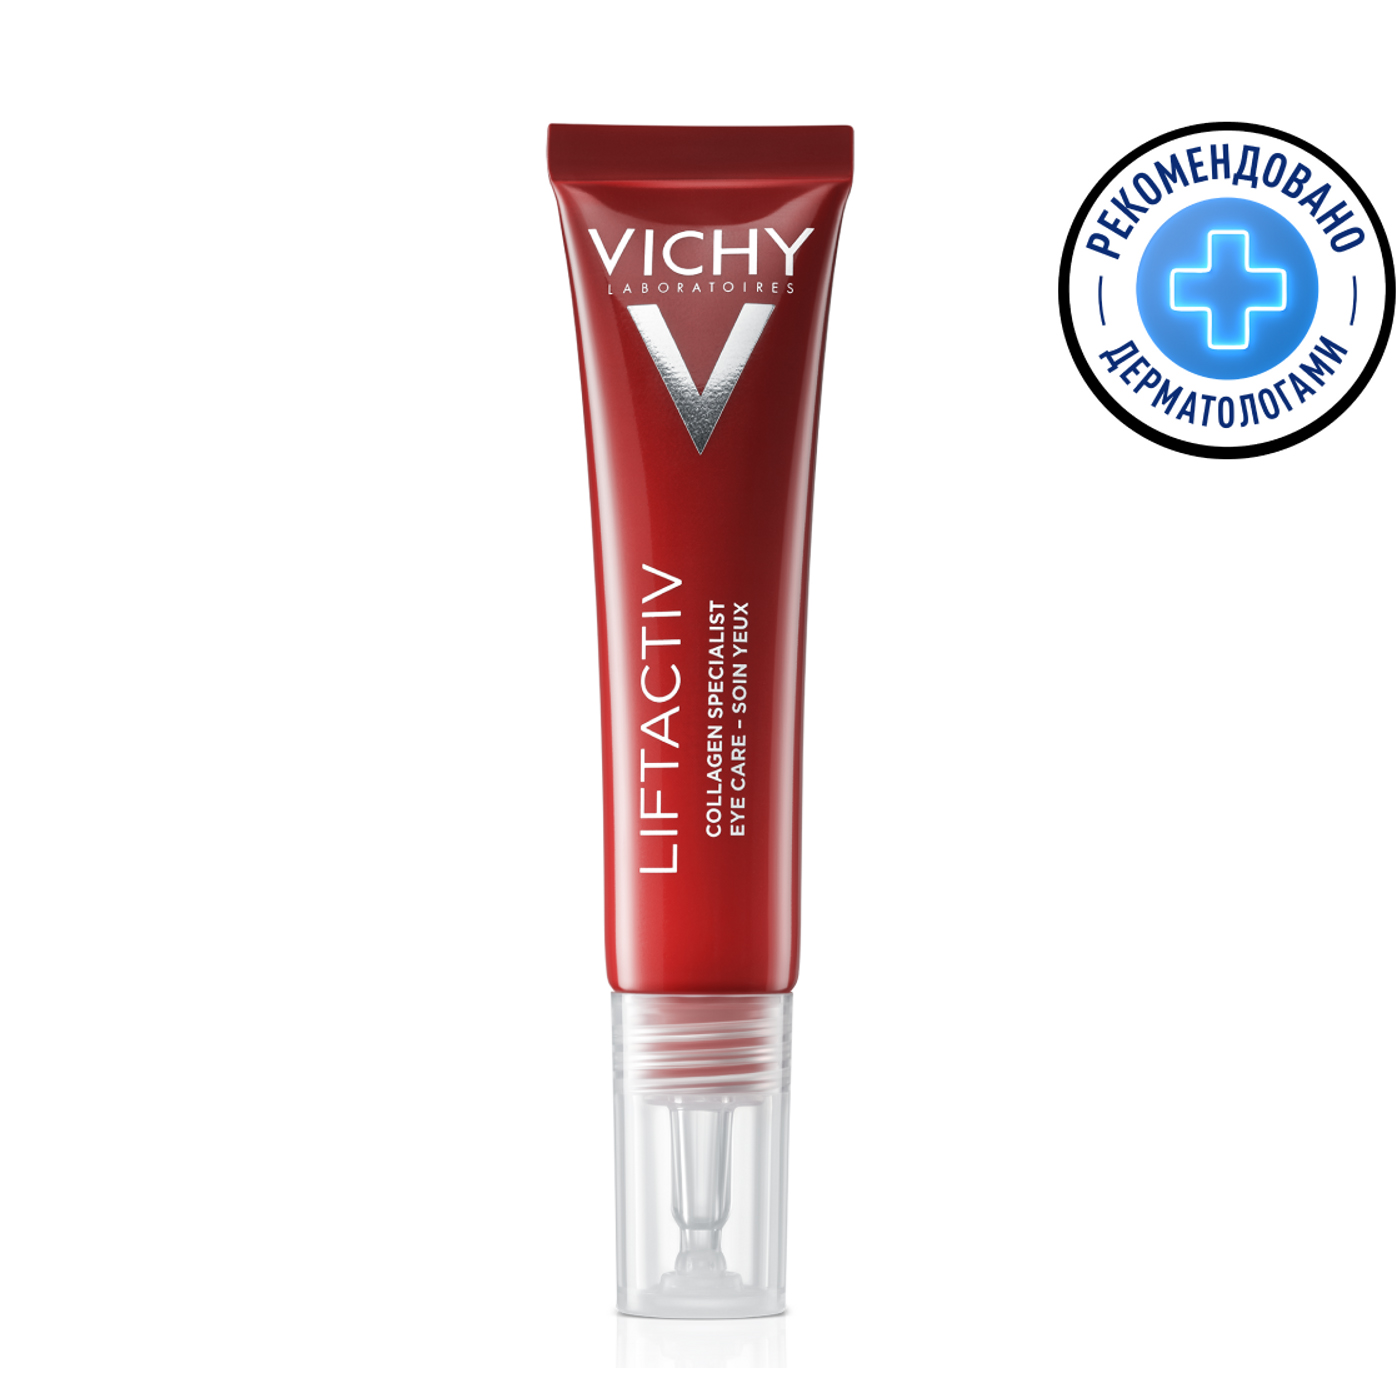 Vichy Крем для кожи вокруг глаз, 15 мл (Vichy, Liftactiv) olay крем для кожи вокруг глаз с пептидами коллагена 24 15 мл 0 5 жидк унции